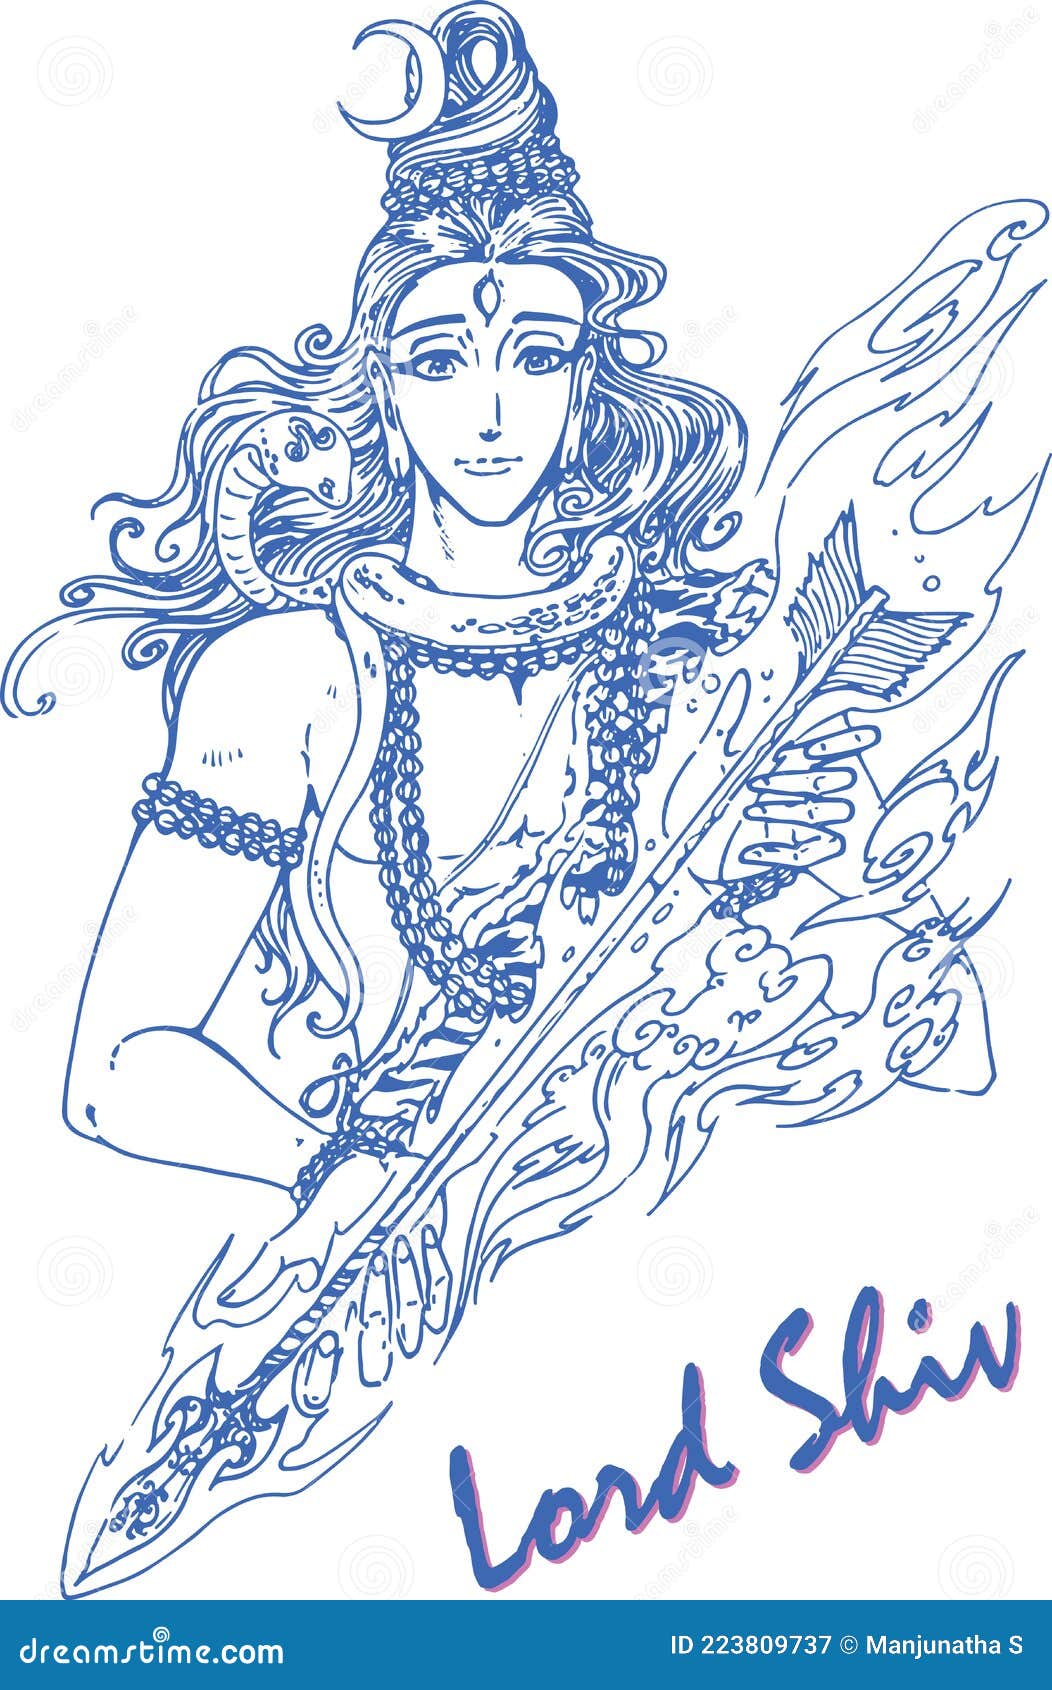 Lord Shiva Digital Art by IXSparrow on DeviantArt